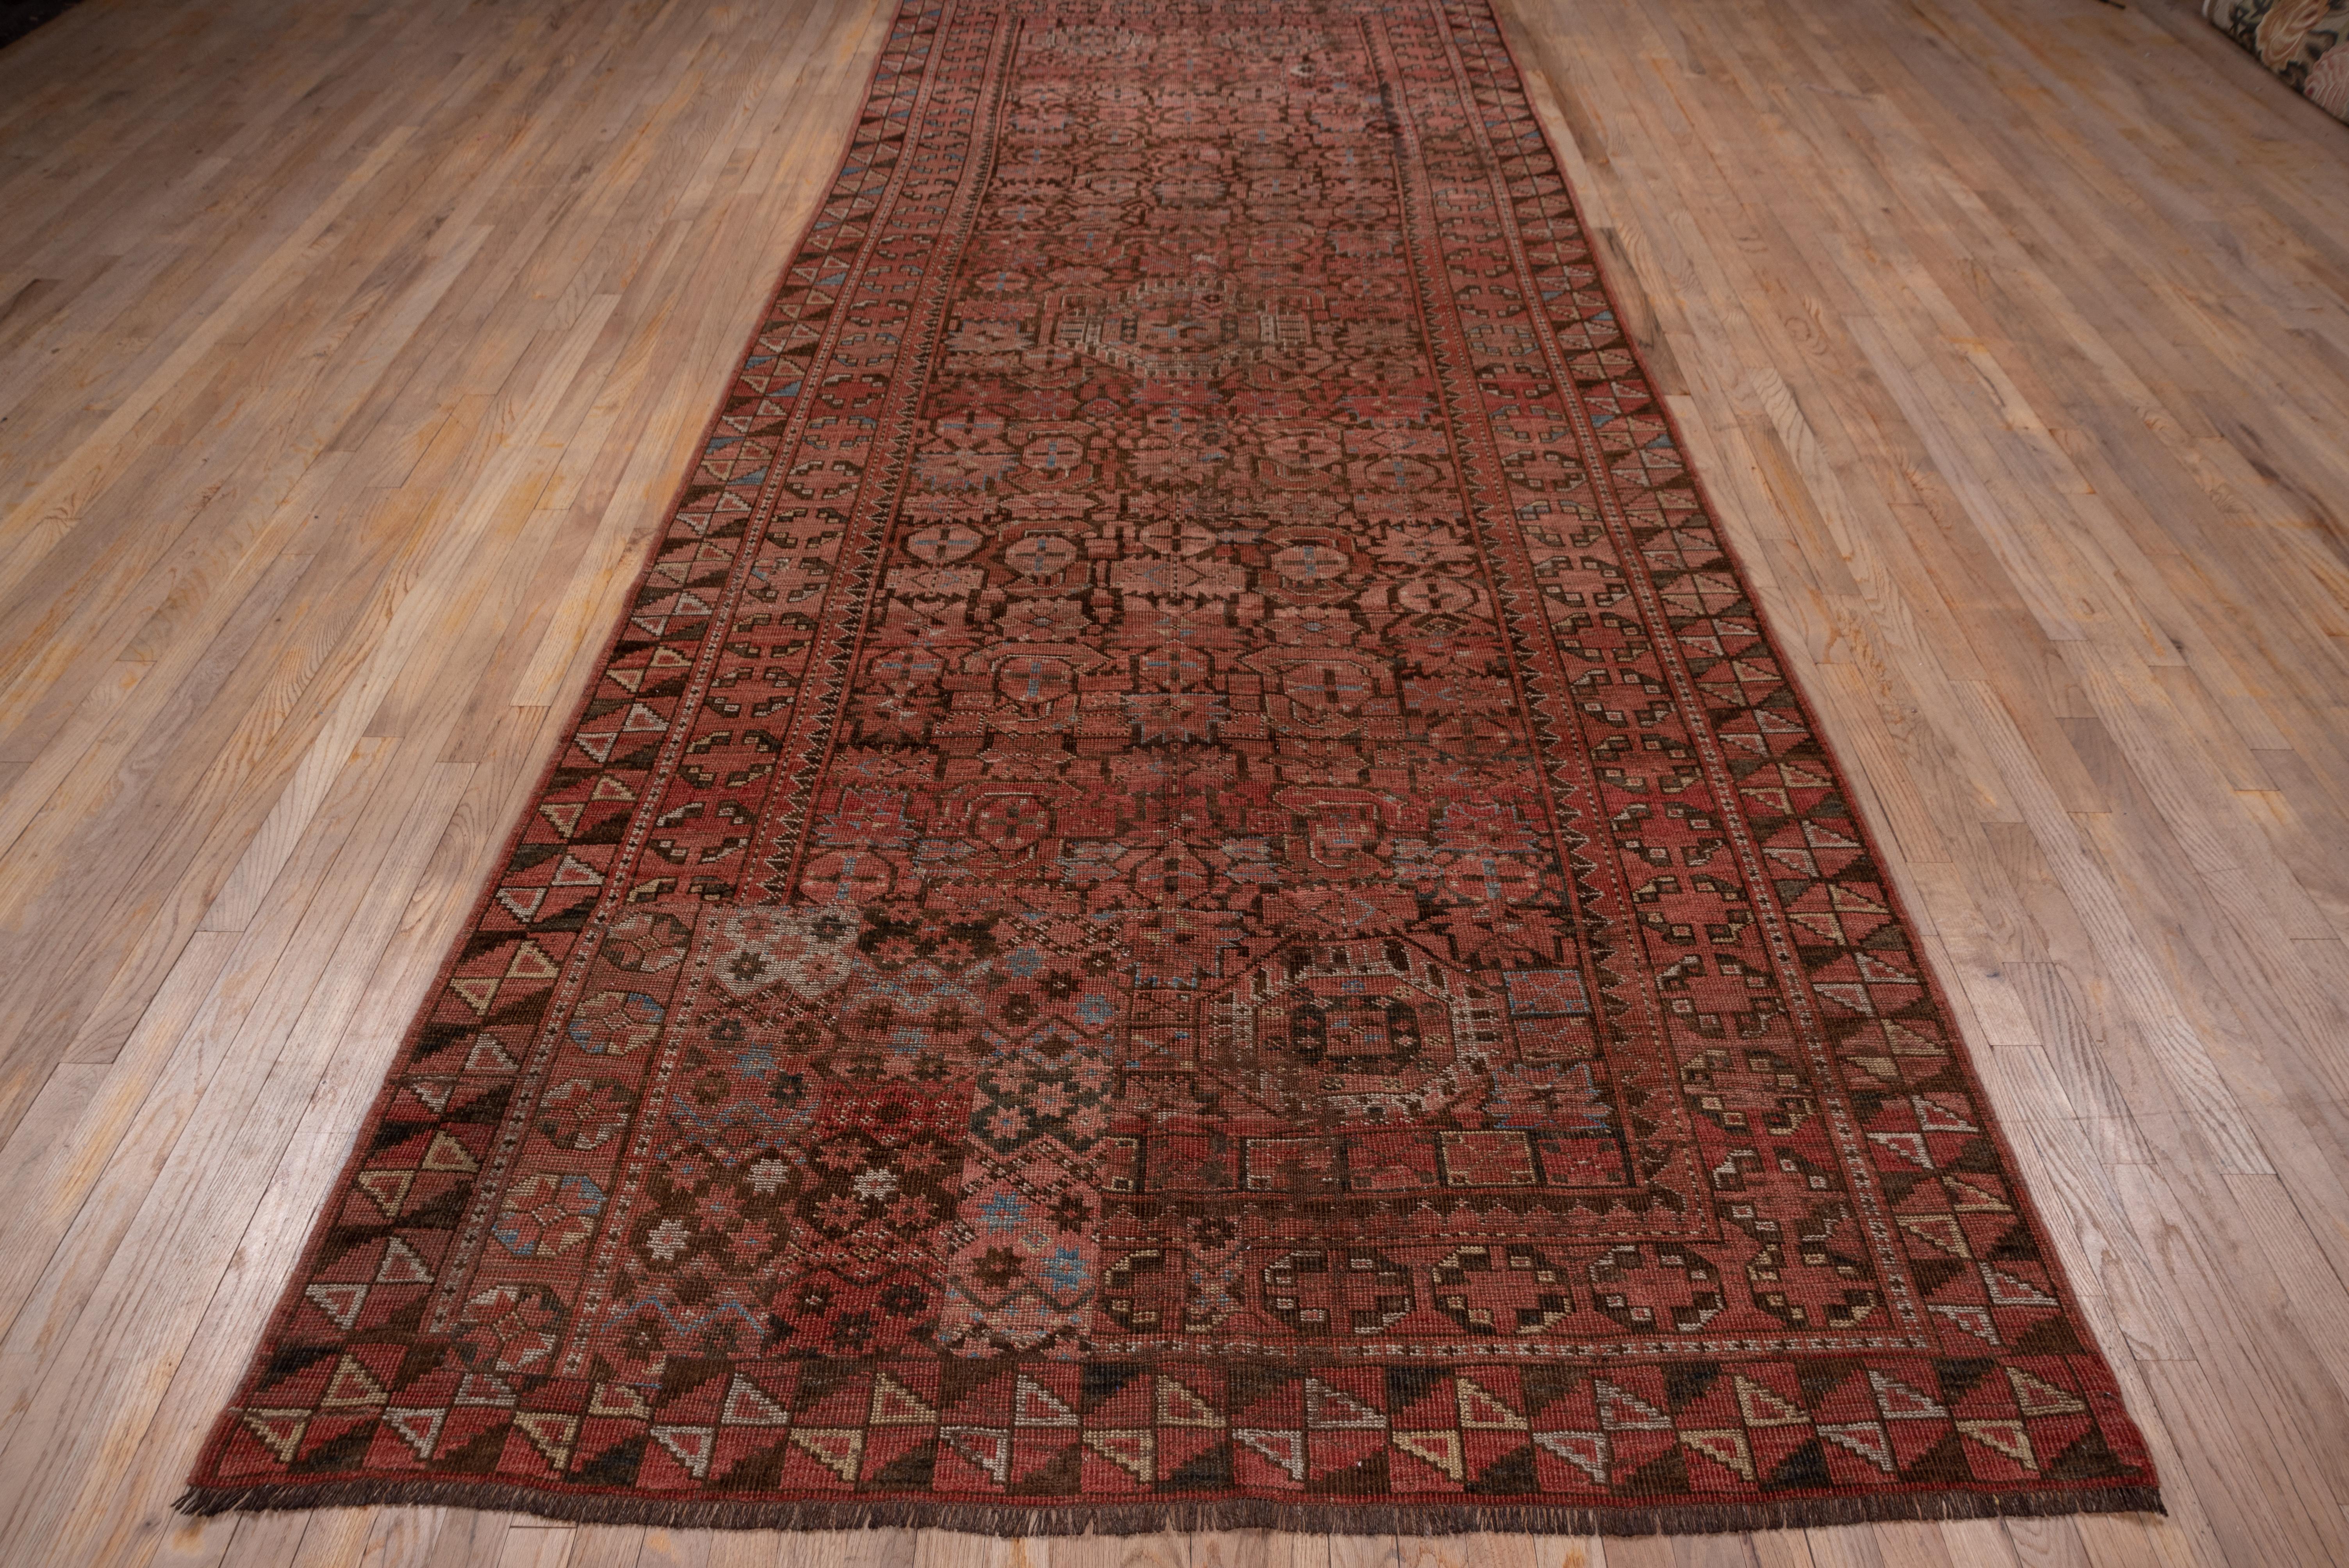 Tribal Fantastic Antique Beshir Gallery Carpet For Sale